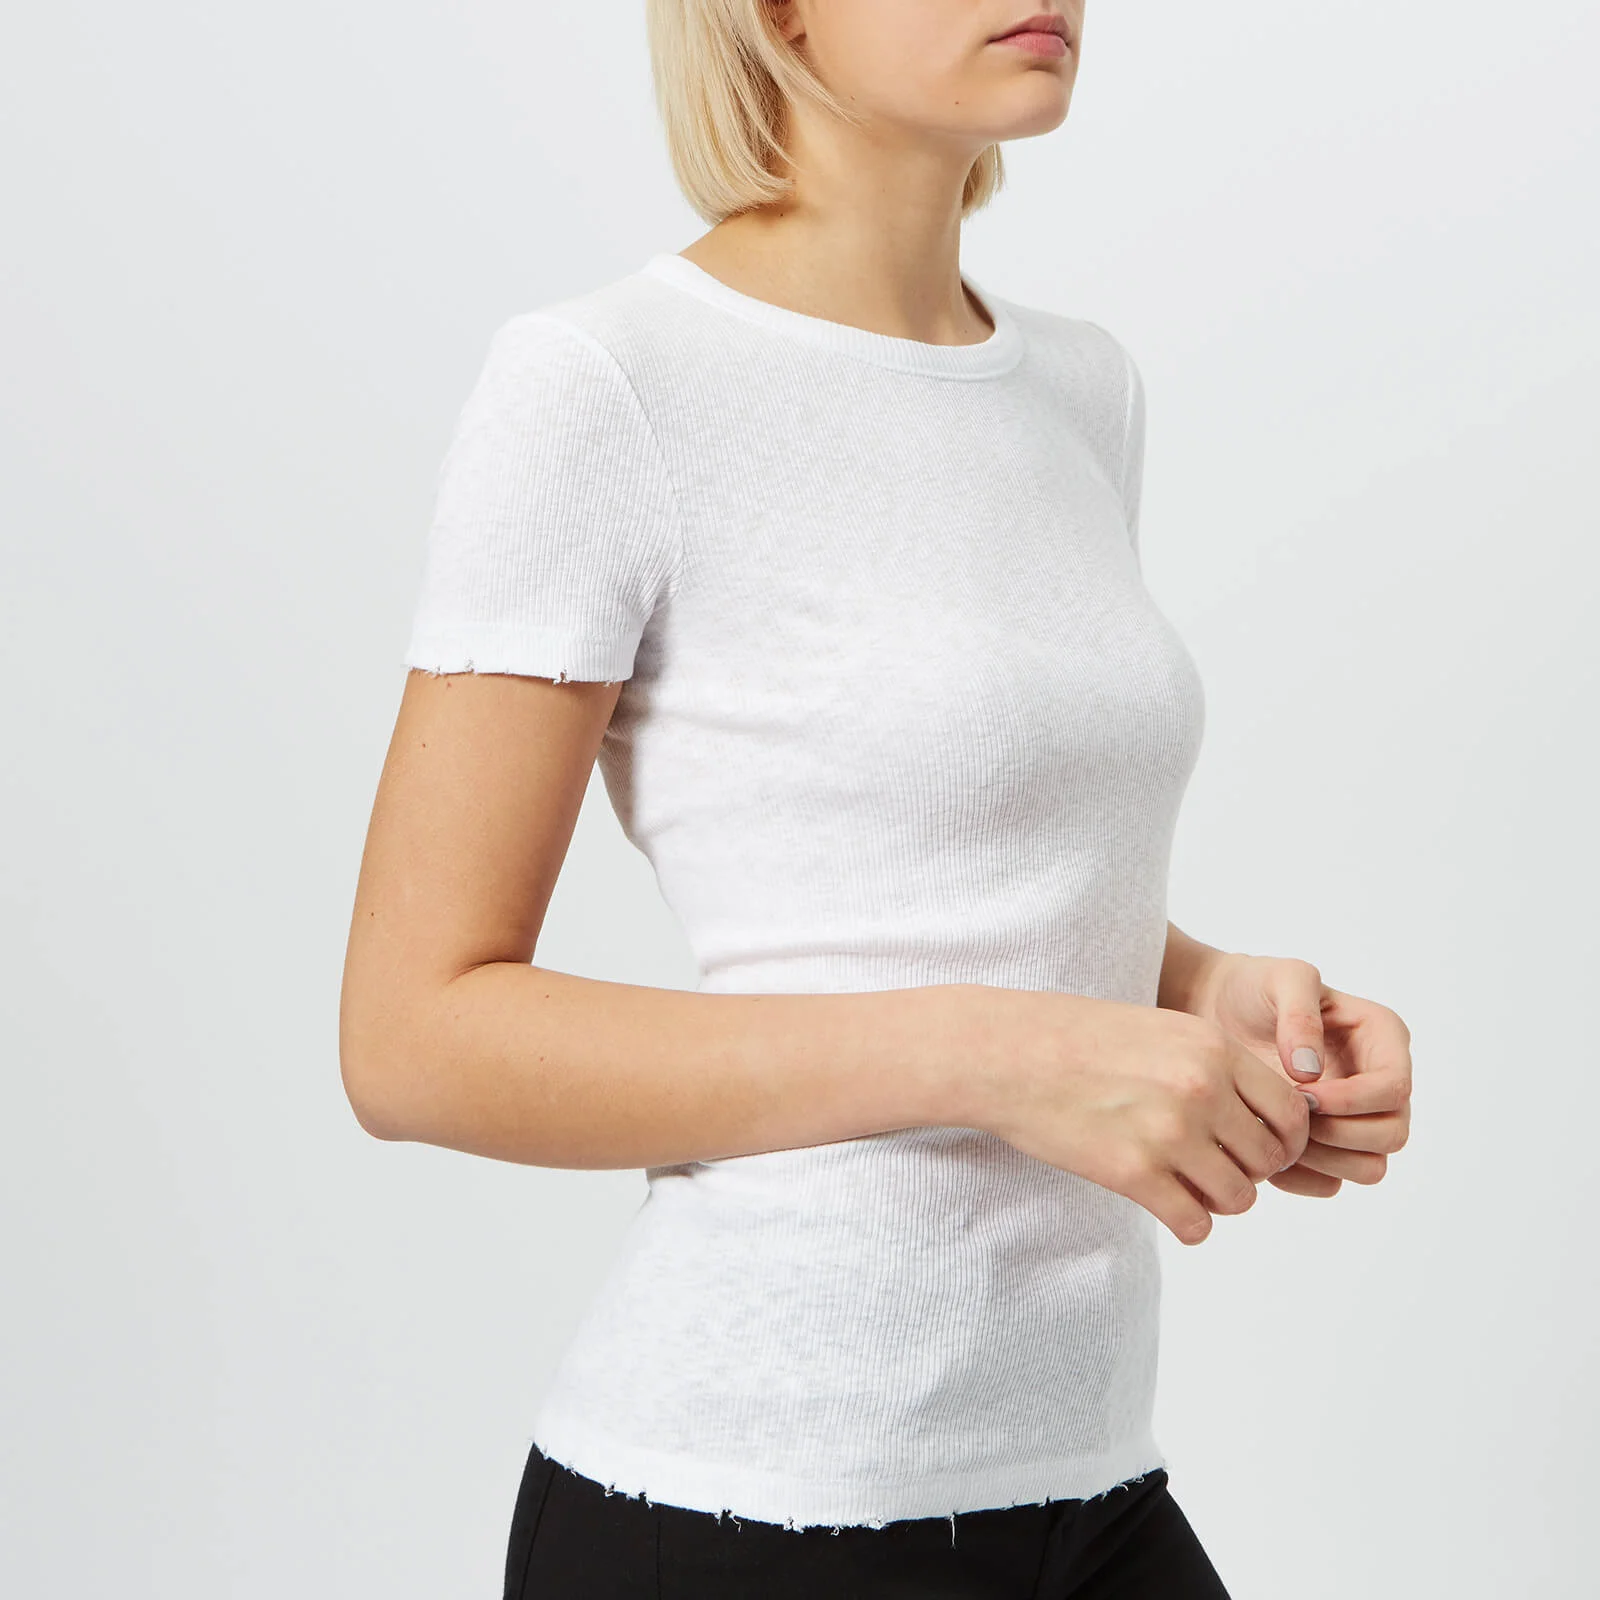 Helmut Lang Women's Chewed Up Vintage T-Shirt - White Image 1